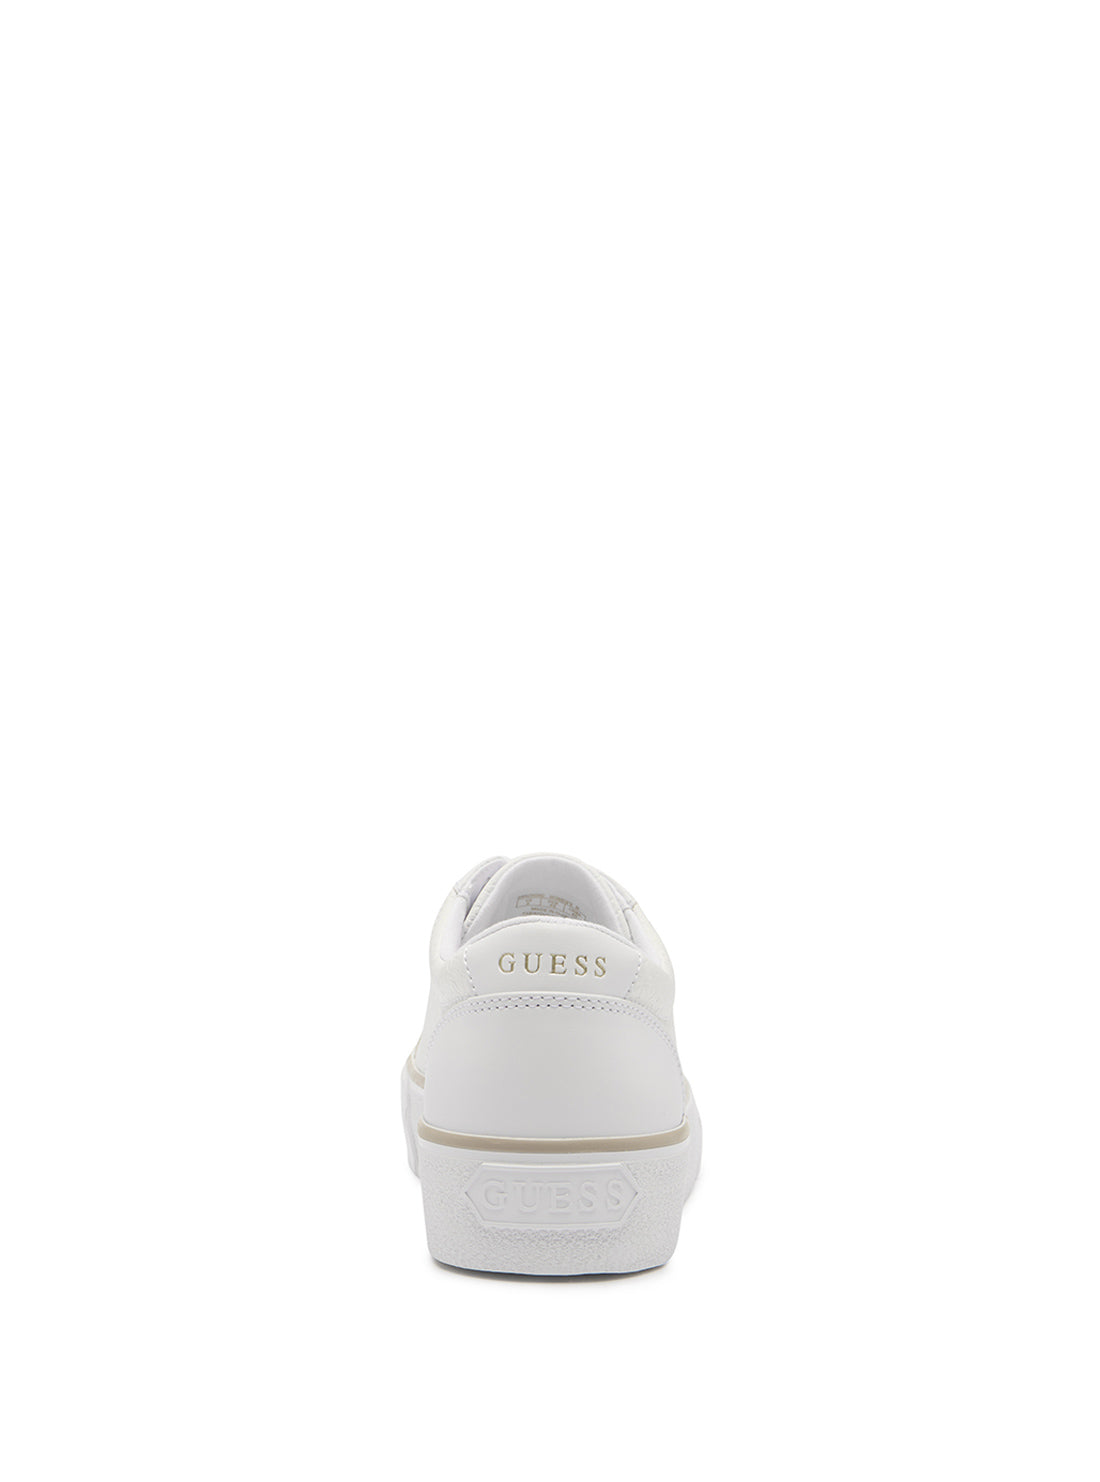 GUESS Women's White Nortin Logo Low Top Sneakers NORTIN2 Back View